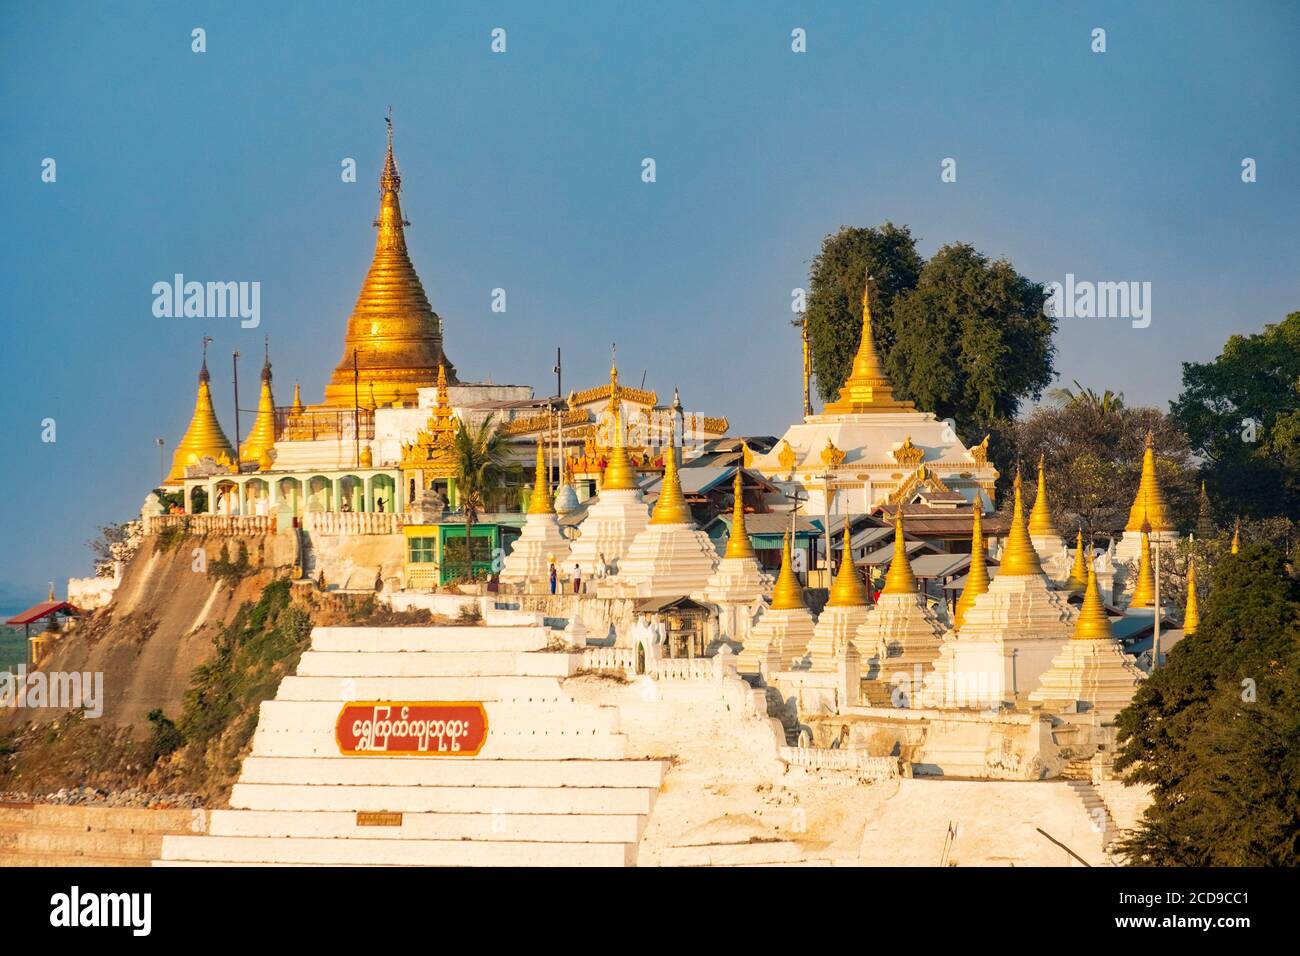 Myanmar (Burma), Mandalay region, Sagaing Hill and Buddhist Pagodas Stock Photo